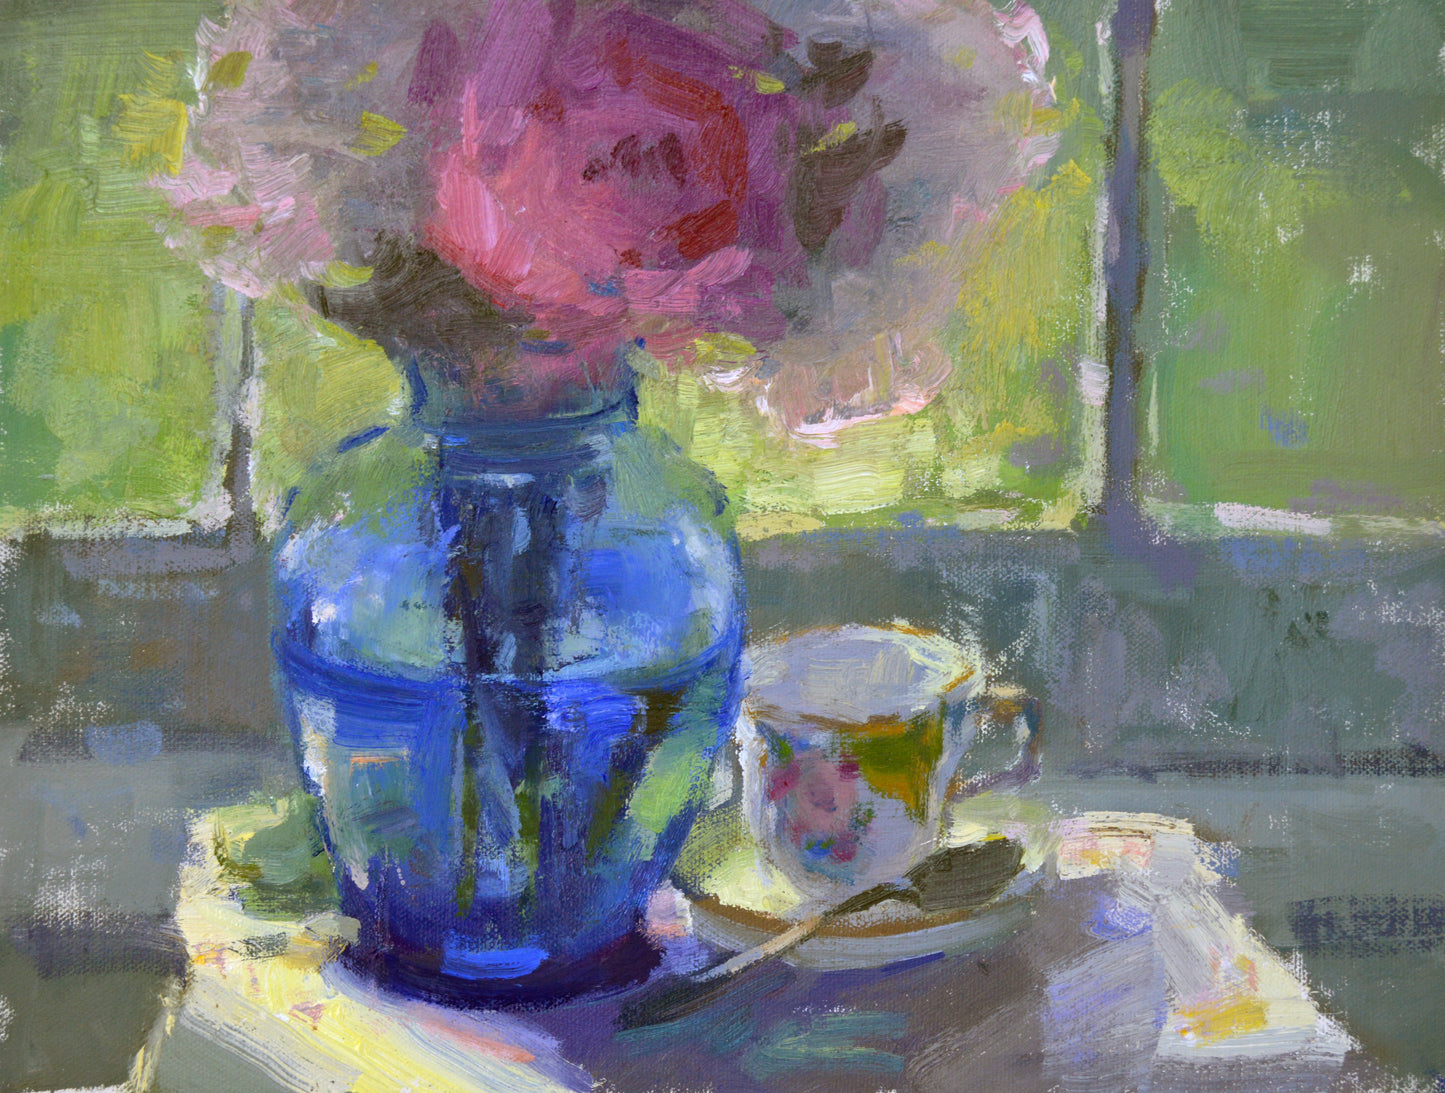 "English Tea" 9x12 original oil painting by Artist Kristina Sellers